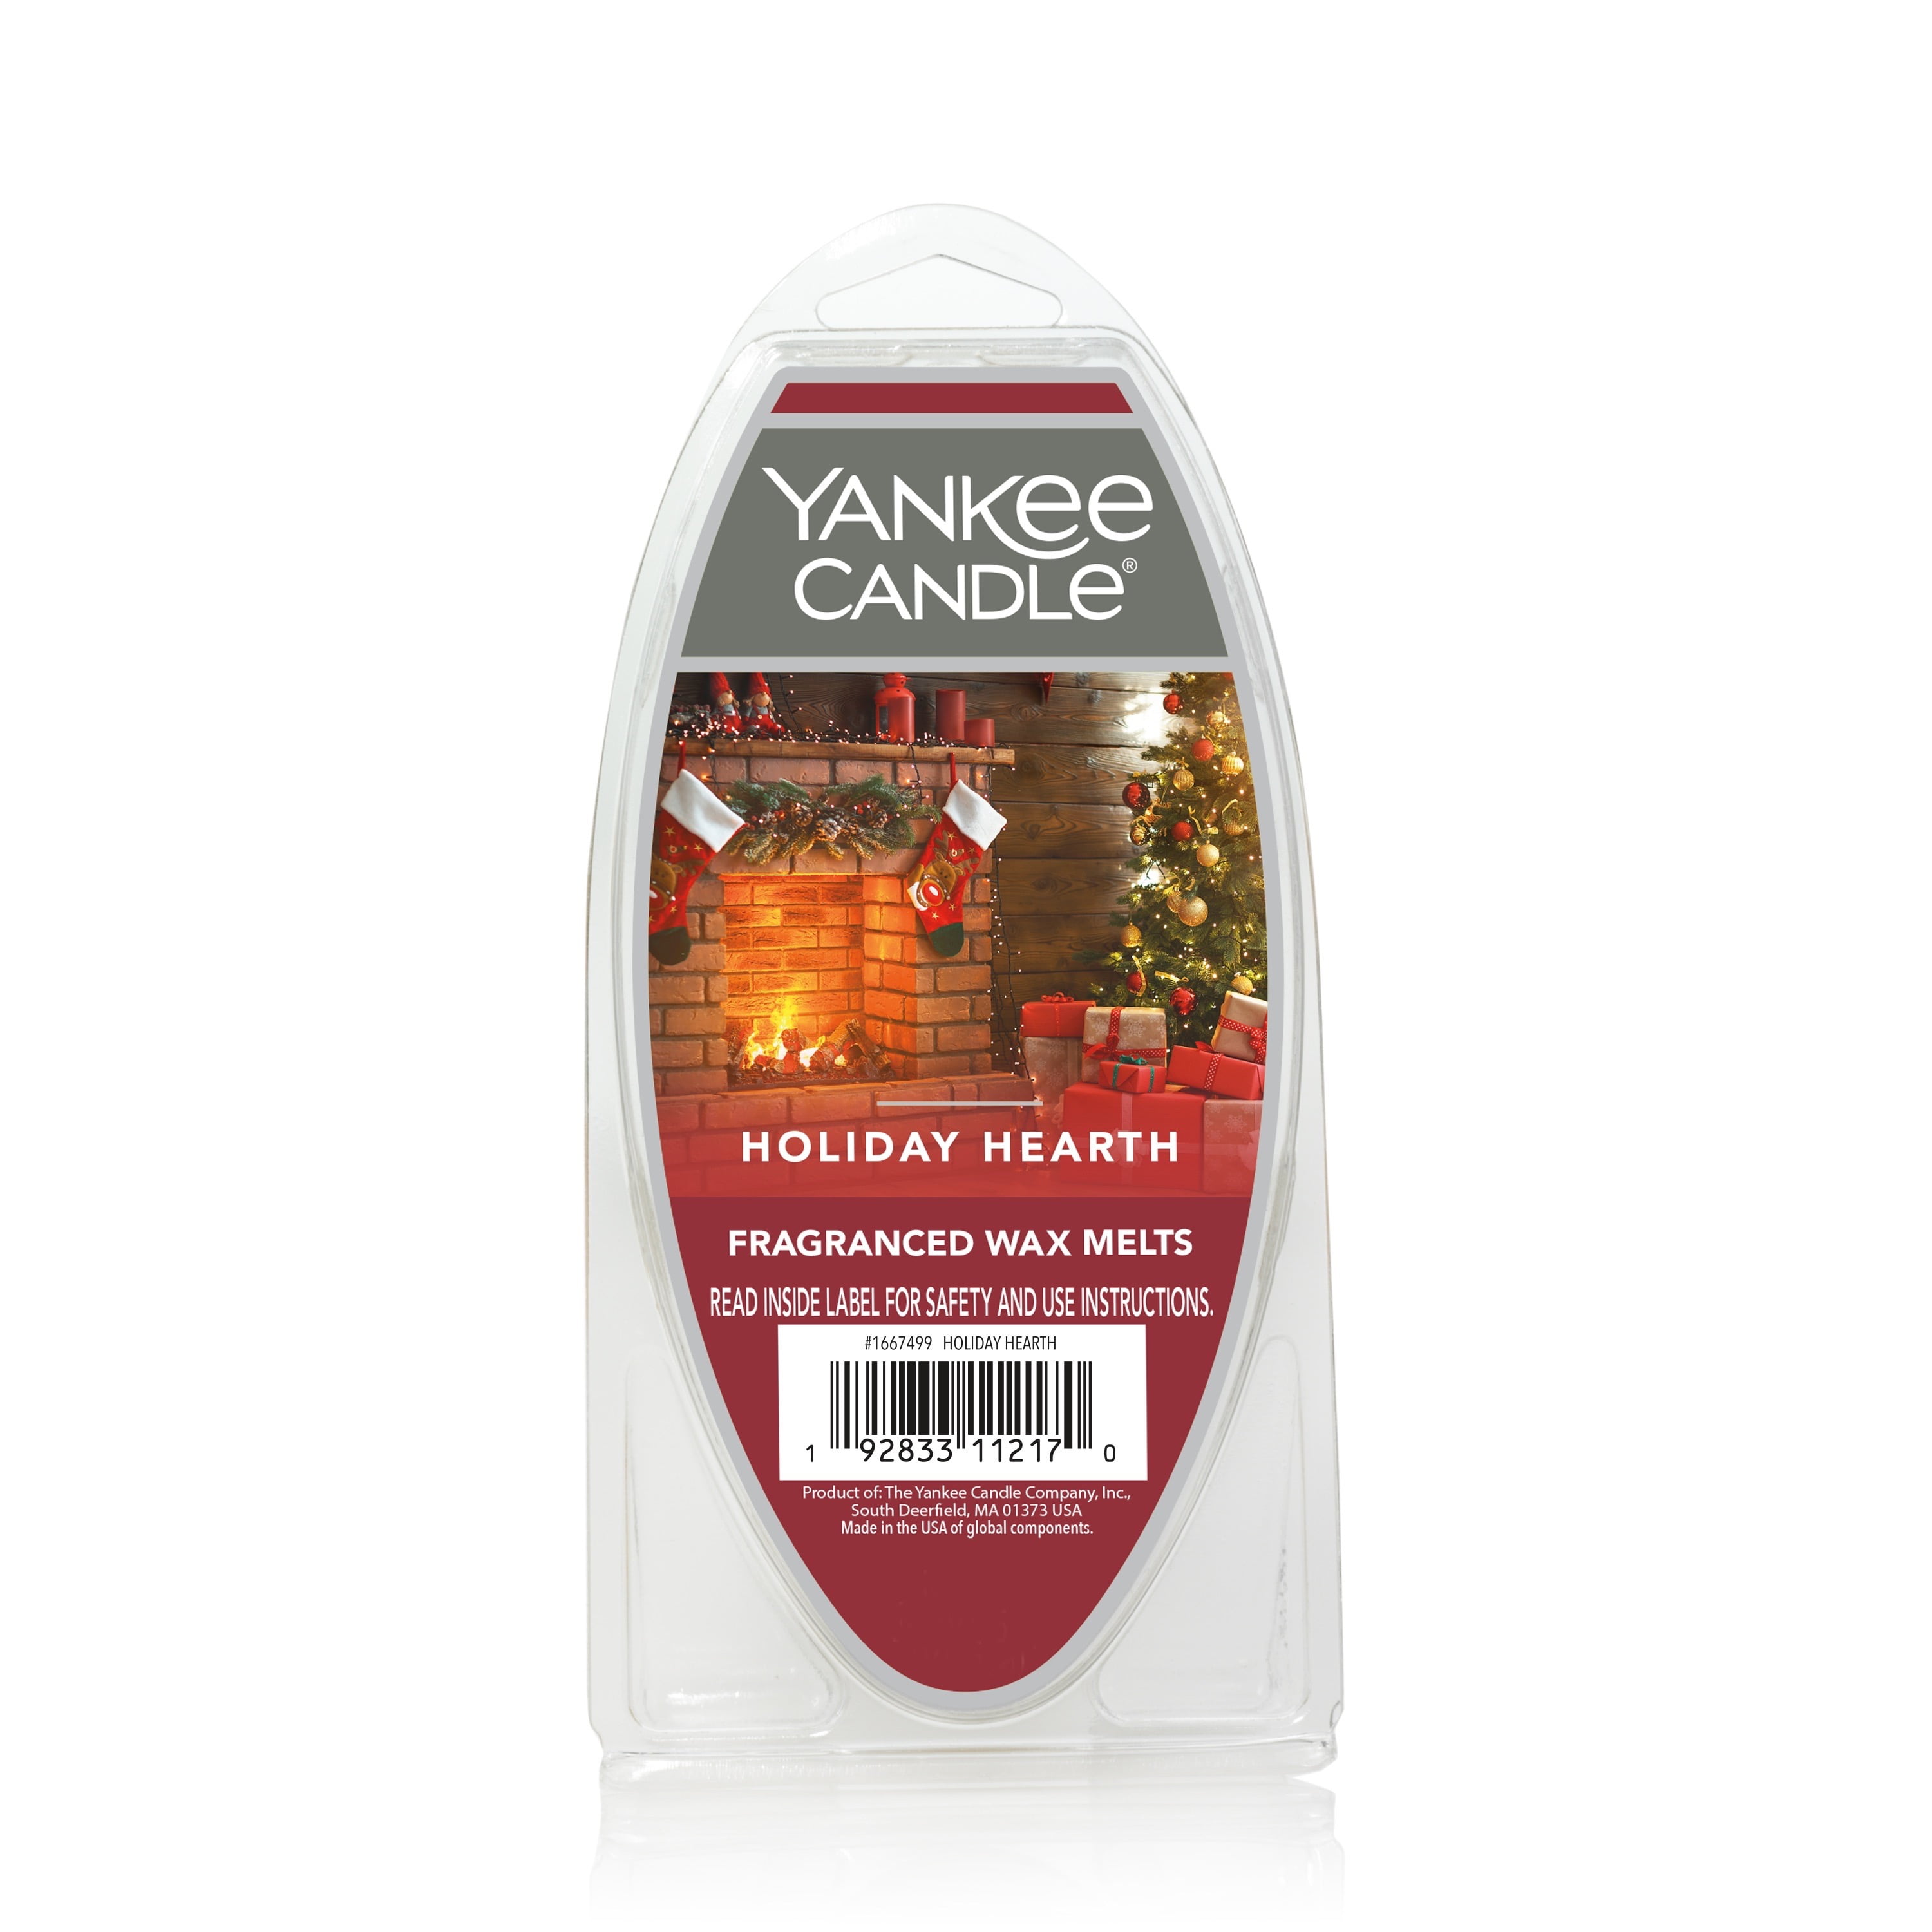 Yankee Candle Holiday Hearth Wax Melts